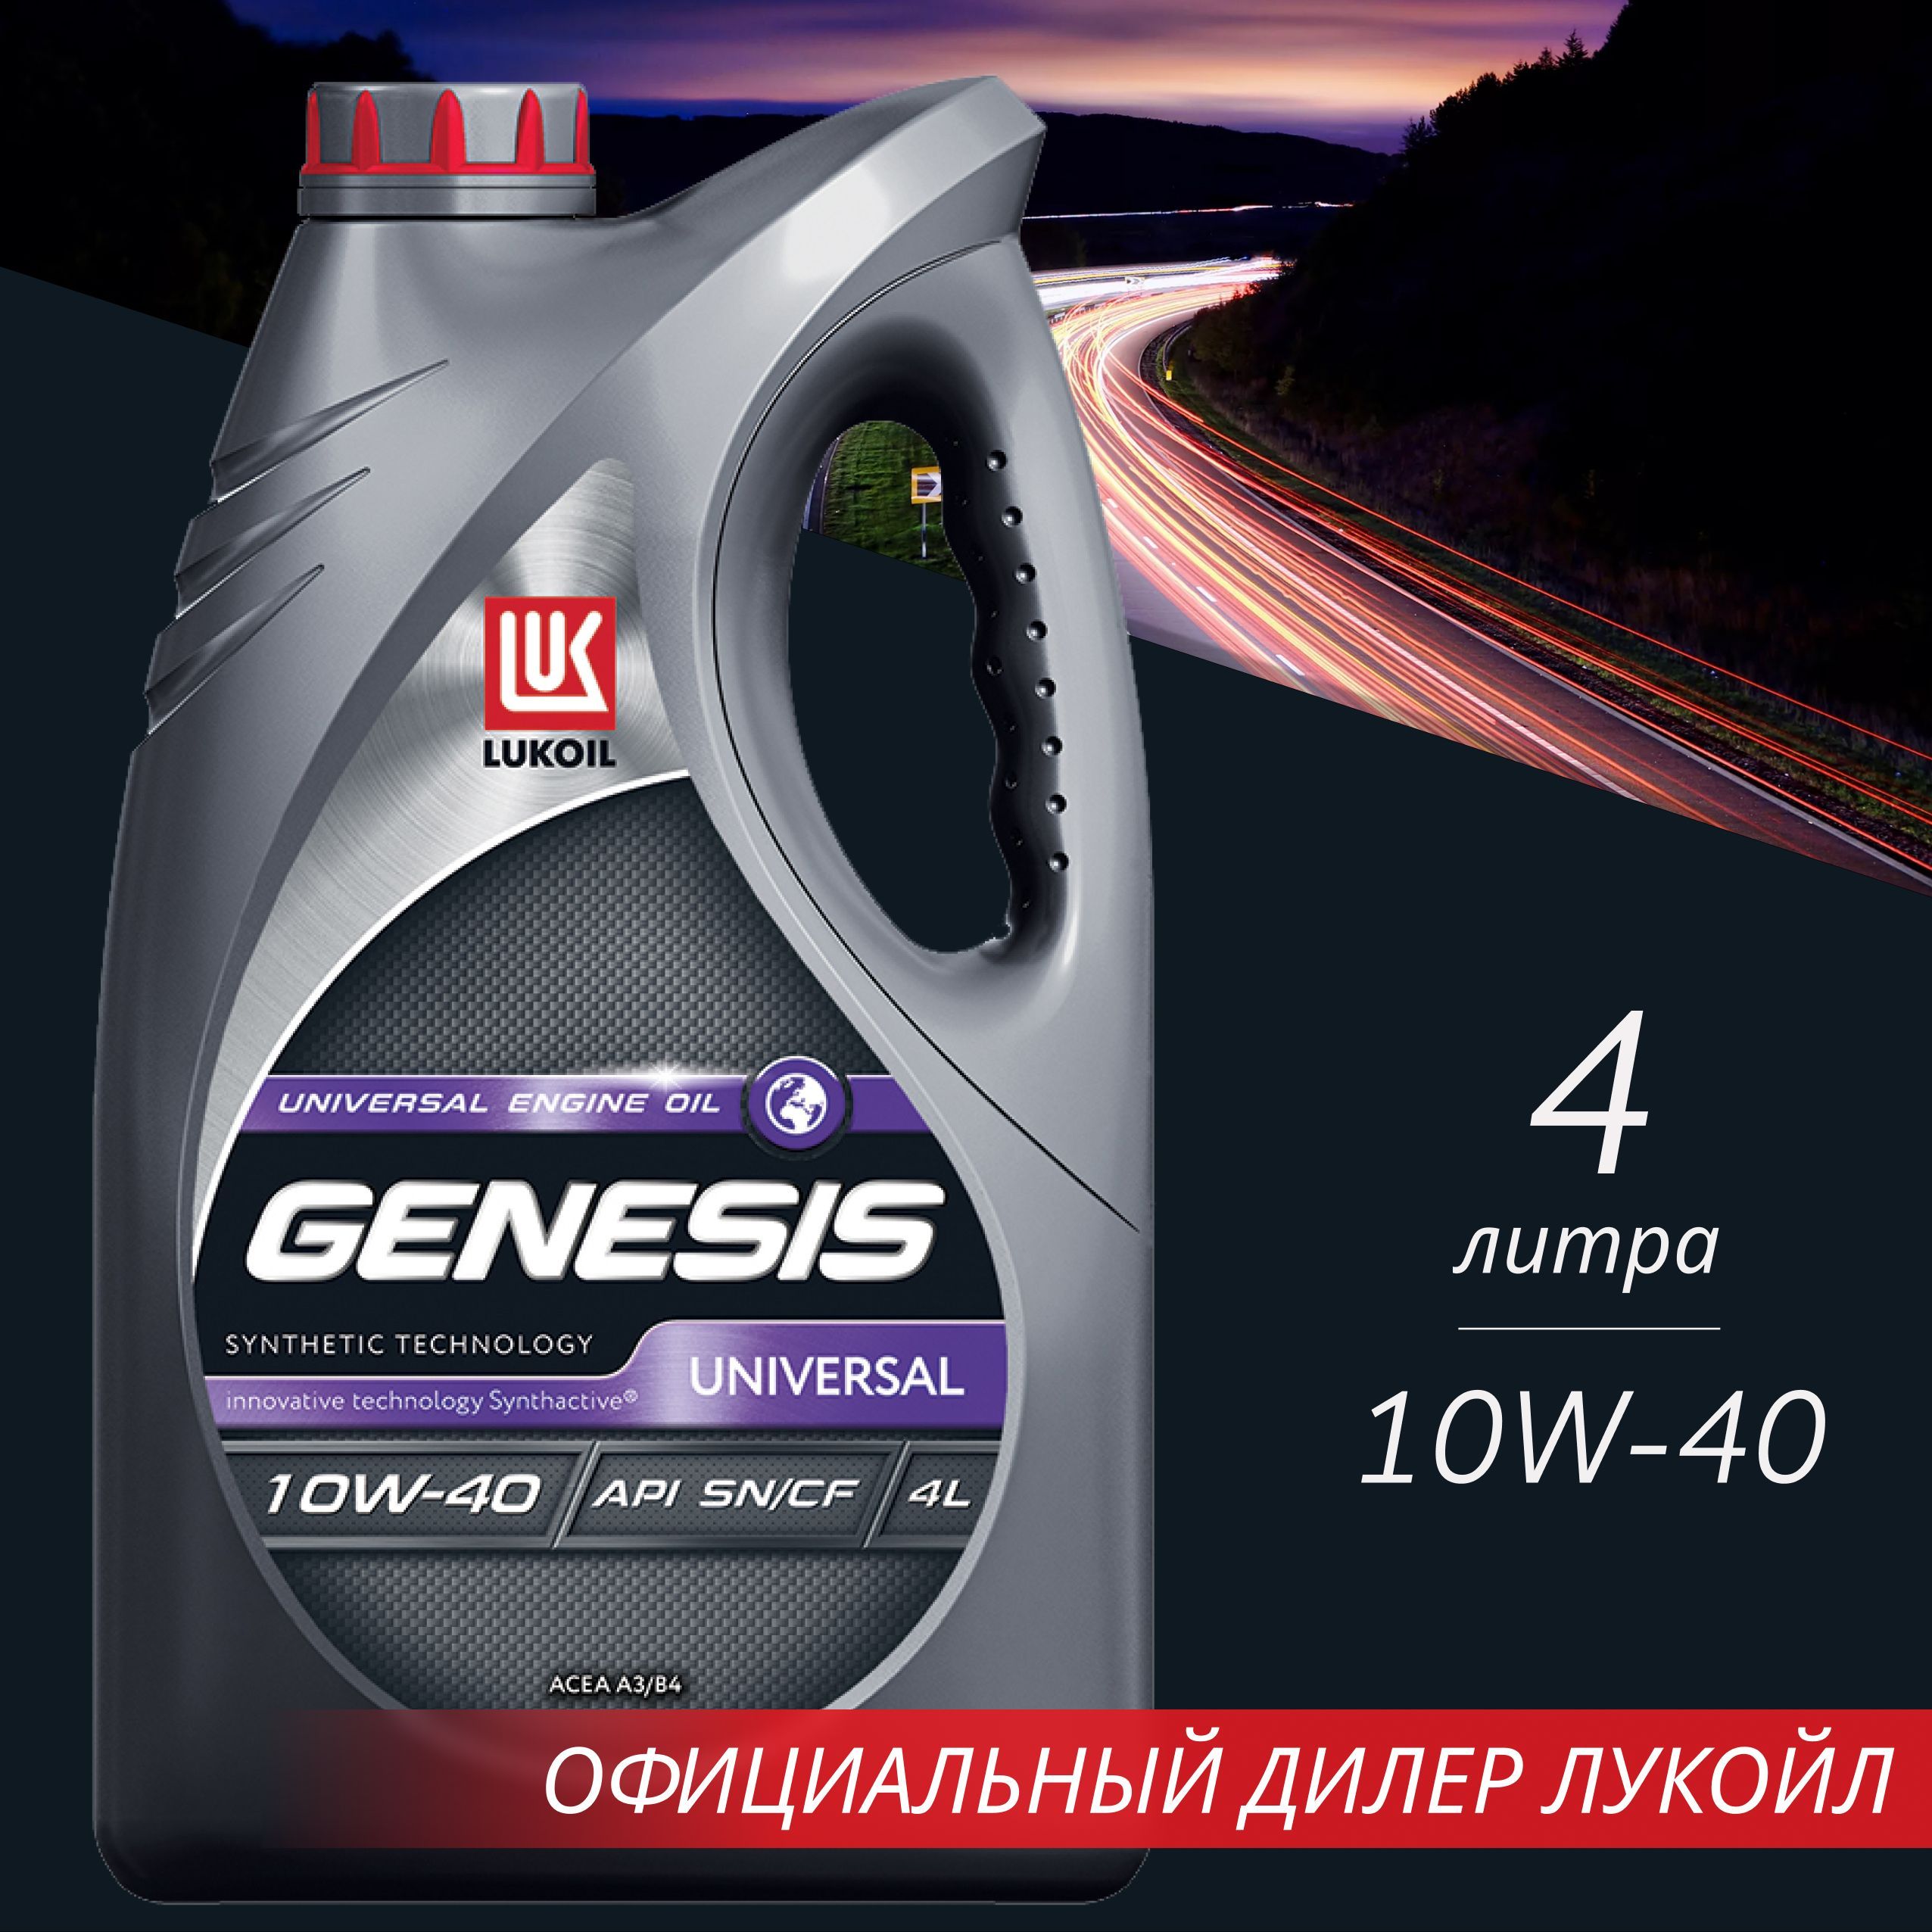 Лукойл генезис 10w40. Генезис универсал 10w 40. 3148646 Lukoil Genesis Universal 10w-40 4l. Лукойл Генезис 10w 40 универсал синтетика. Моторное масло Генезис 10w 40 полусинтетика.